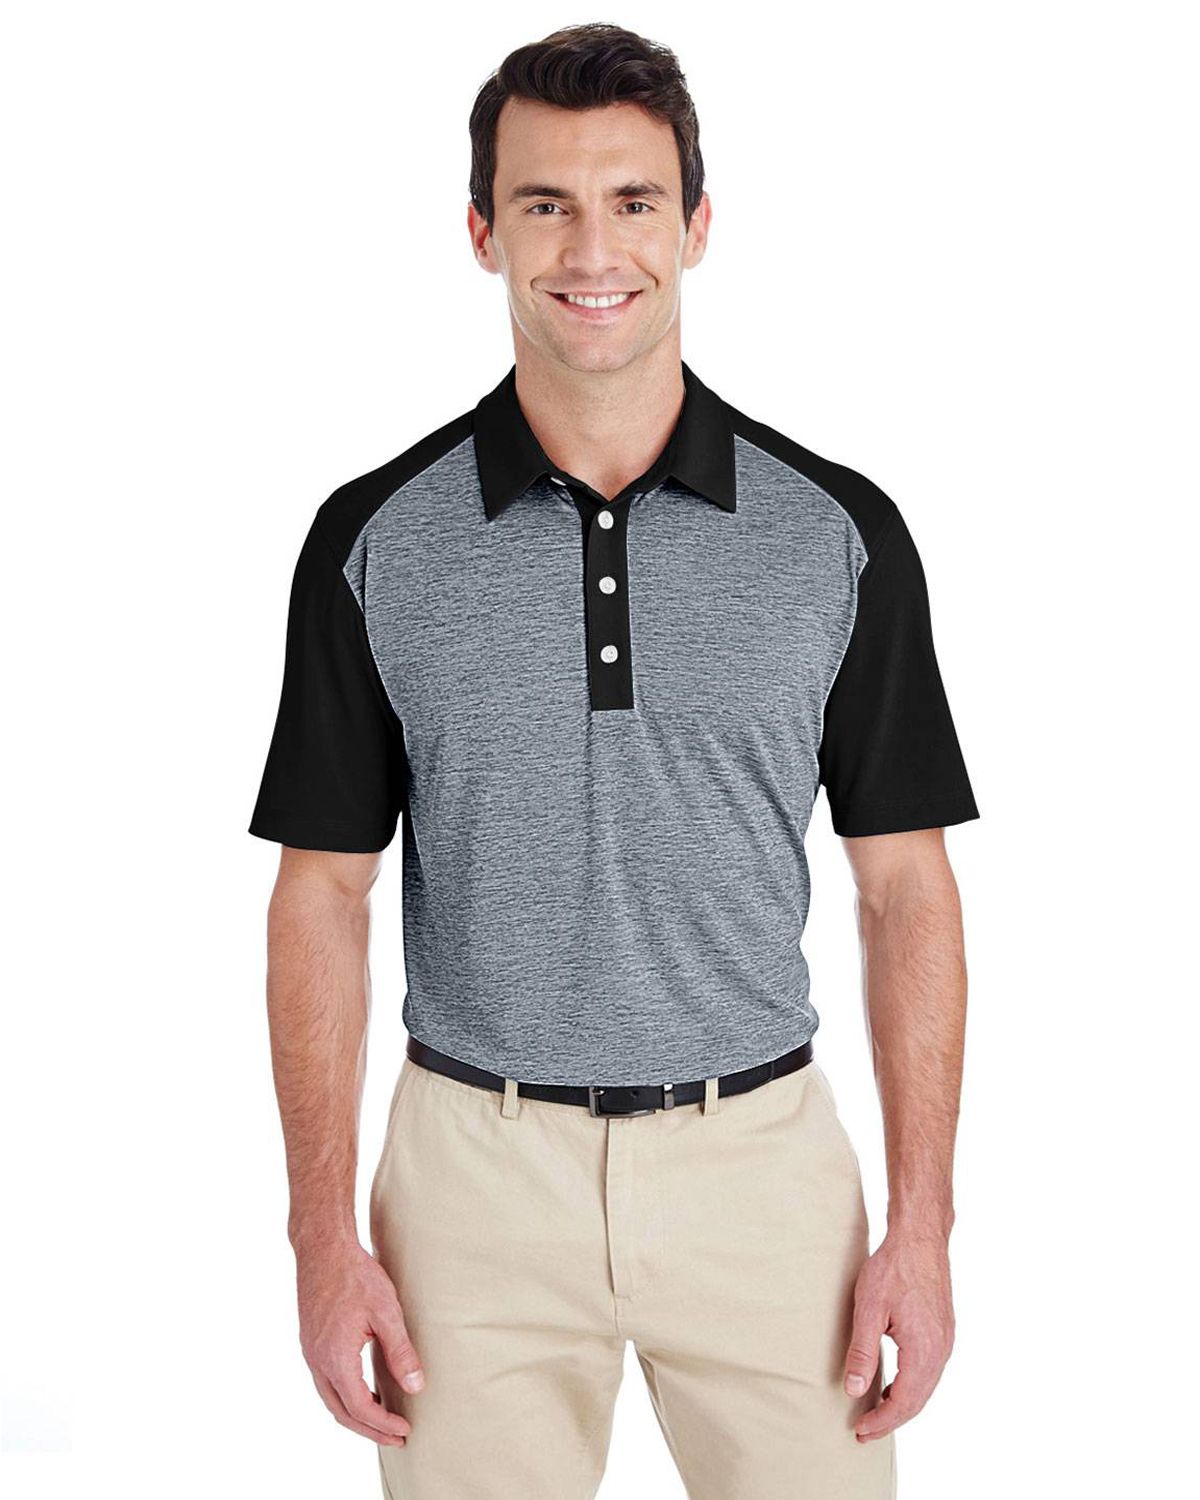 Adidas Golf A145 Men's Heather Block Polo Shirt